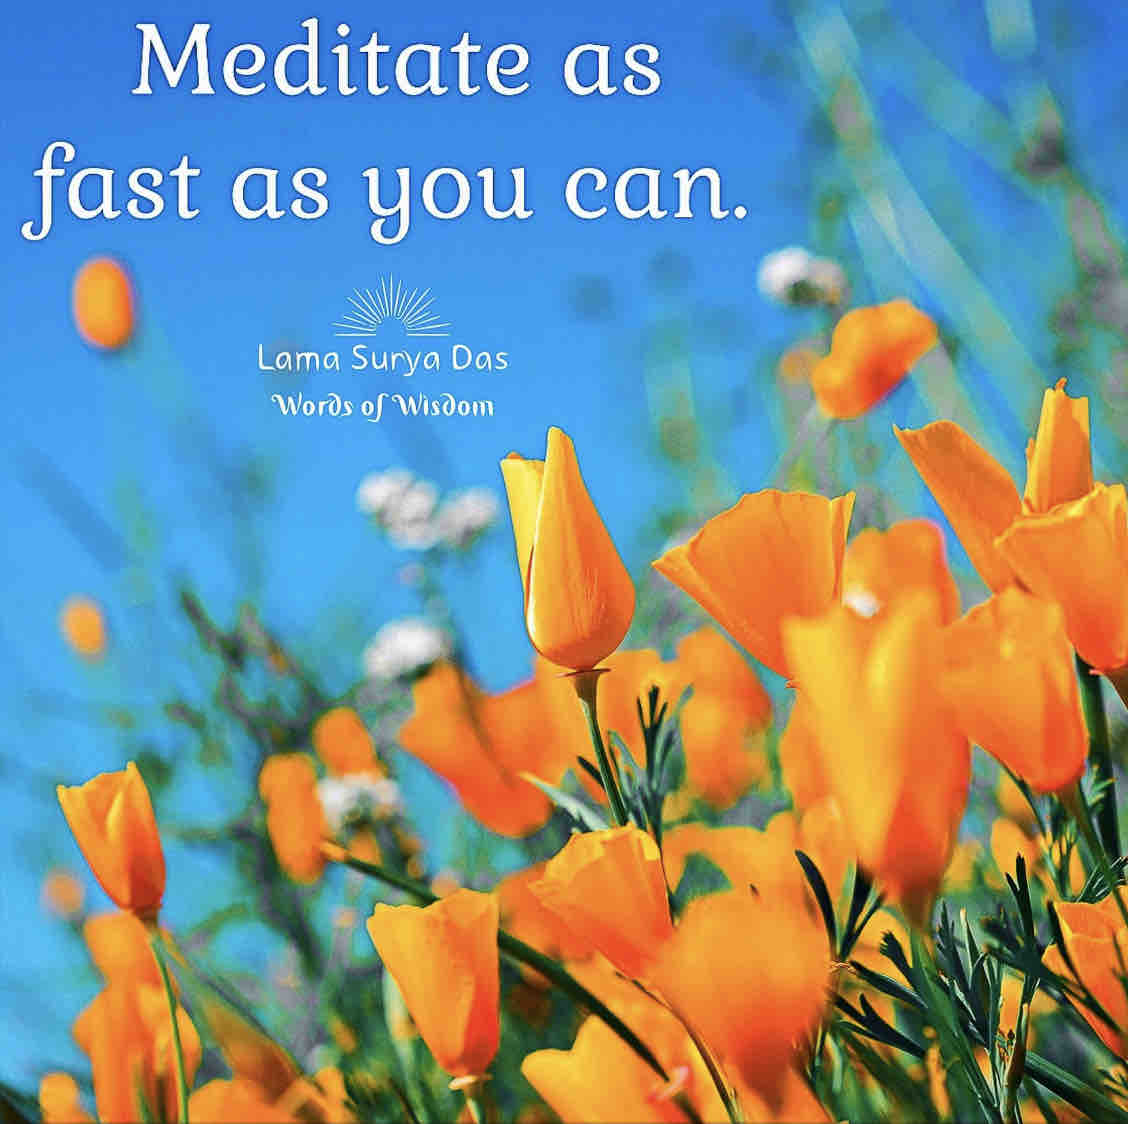 Meditate as fast as you can. ~Lama Surya Das

#LamaSuryaDas #Dzogchen #Meditation  #Mindfulness #SelfInquiry #NonDual  #Buddhism #Healing #Wellness #Yoga  #Dharma #AwakeningtheBuddhaWithin  #HowtoHeal